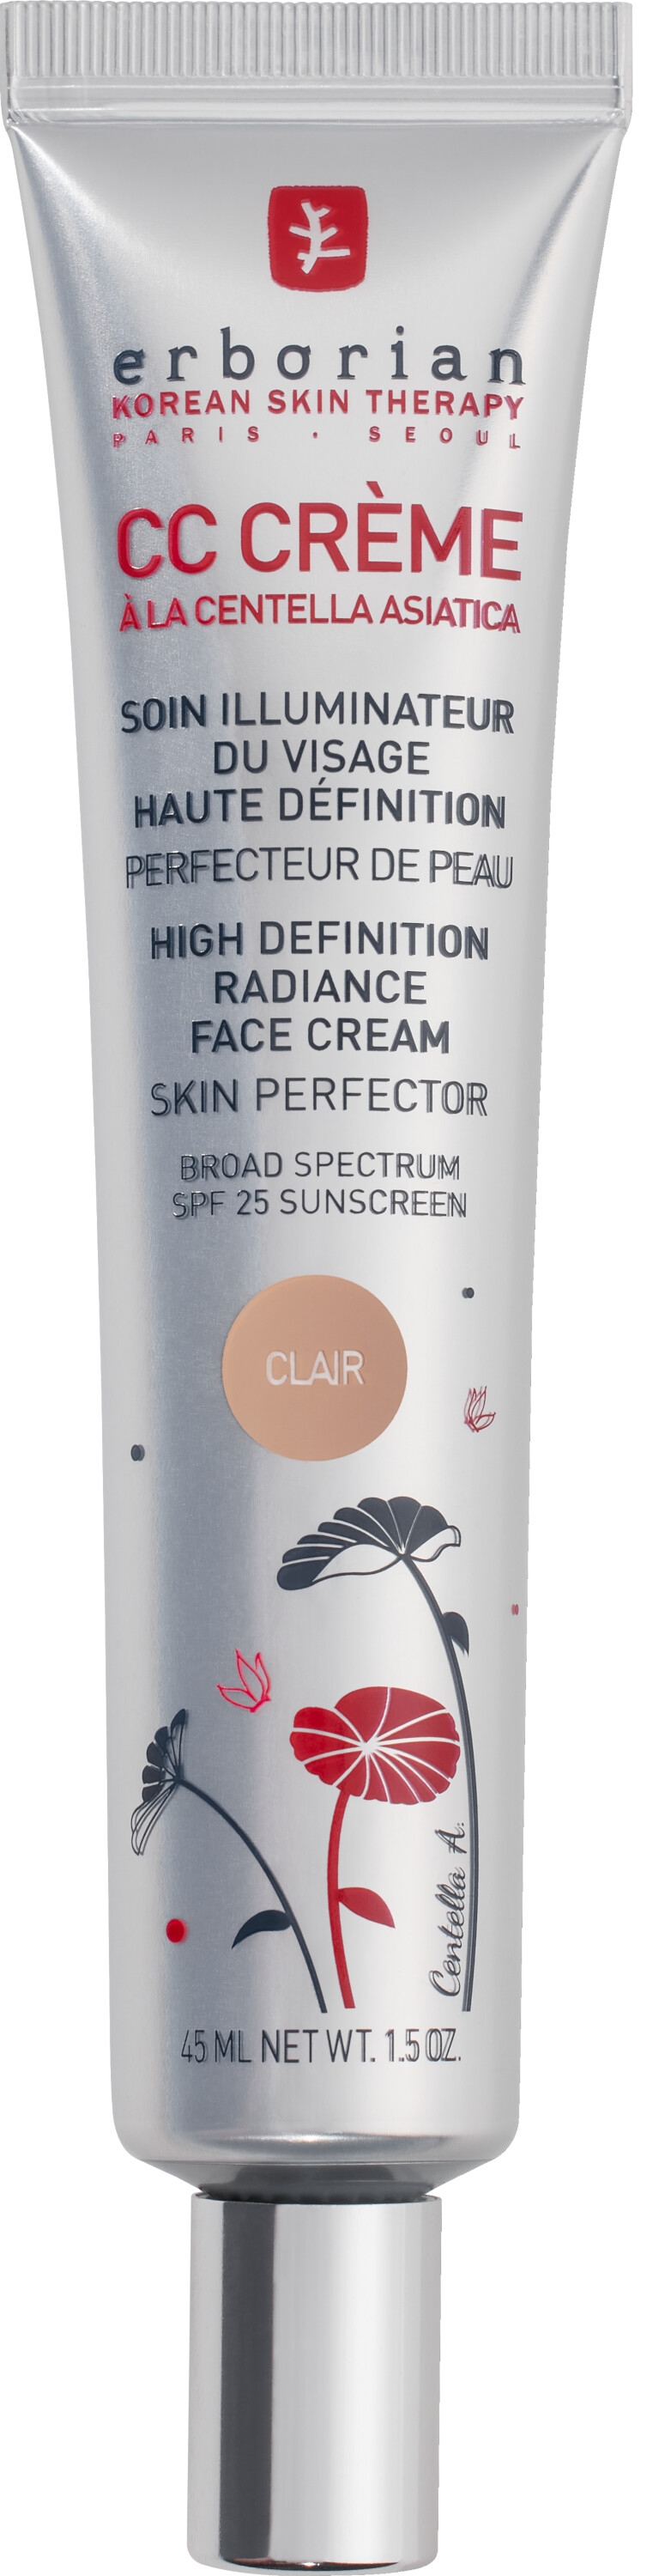 Erborian CC Creme High Definition Radiance Face Cream SPF25 45ml Clair